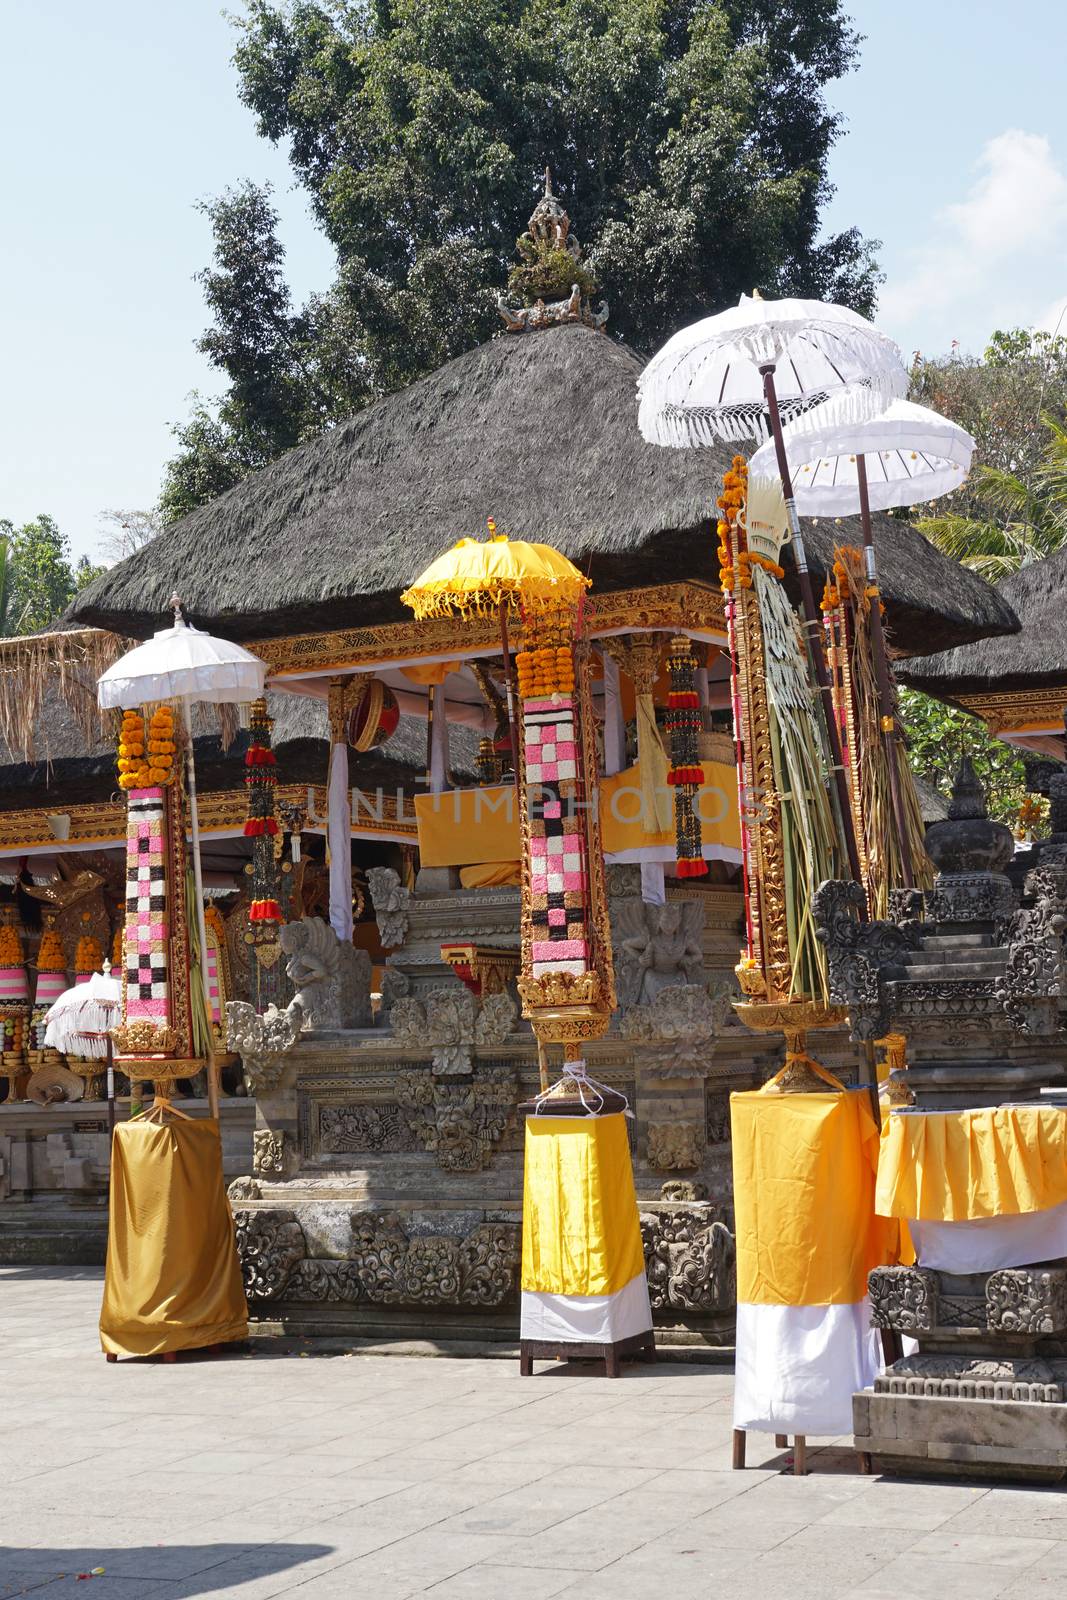 BALI, INDONESIA - DECEMBER 01, 2015: Pura Tirta Empul, one of the sights of Bali on December 01, 2015 in Bali, Indonesia